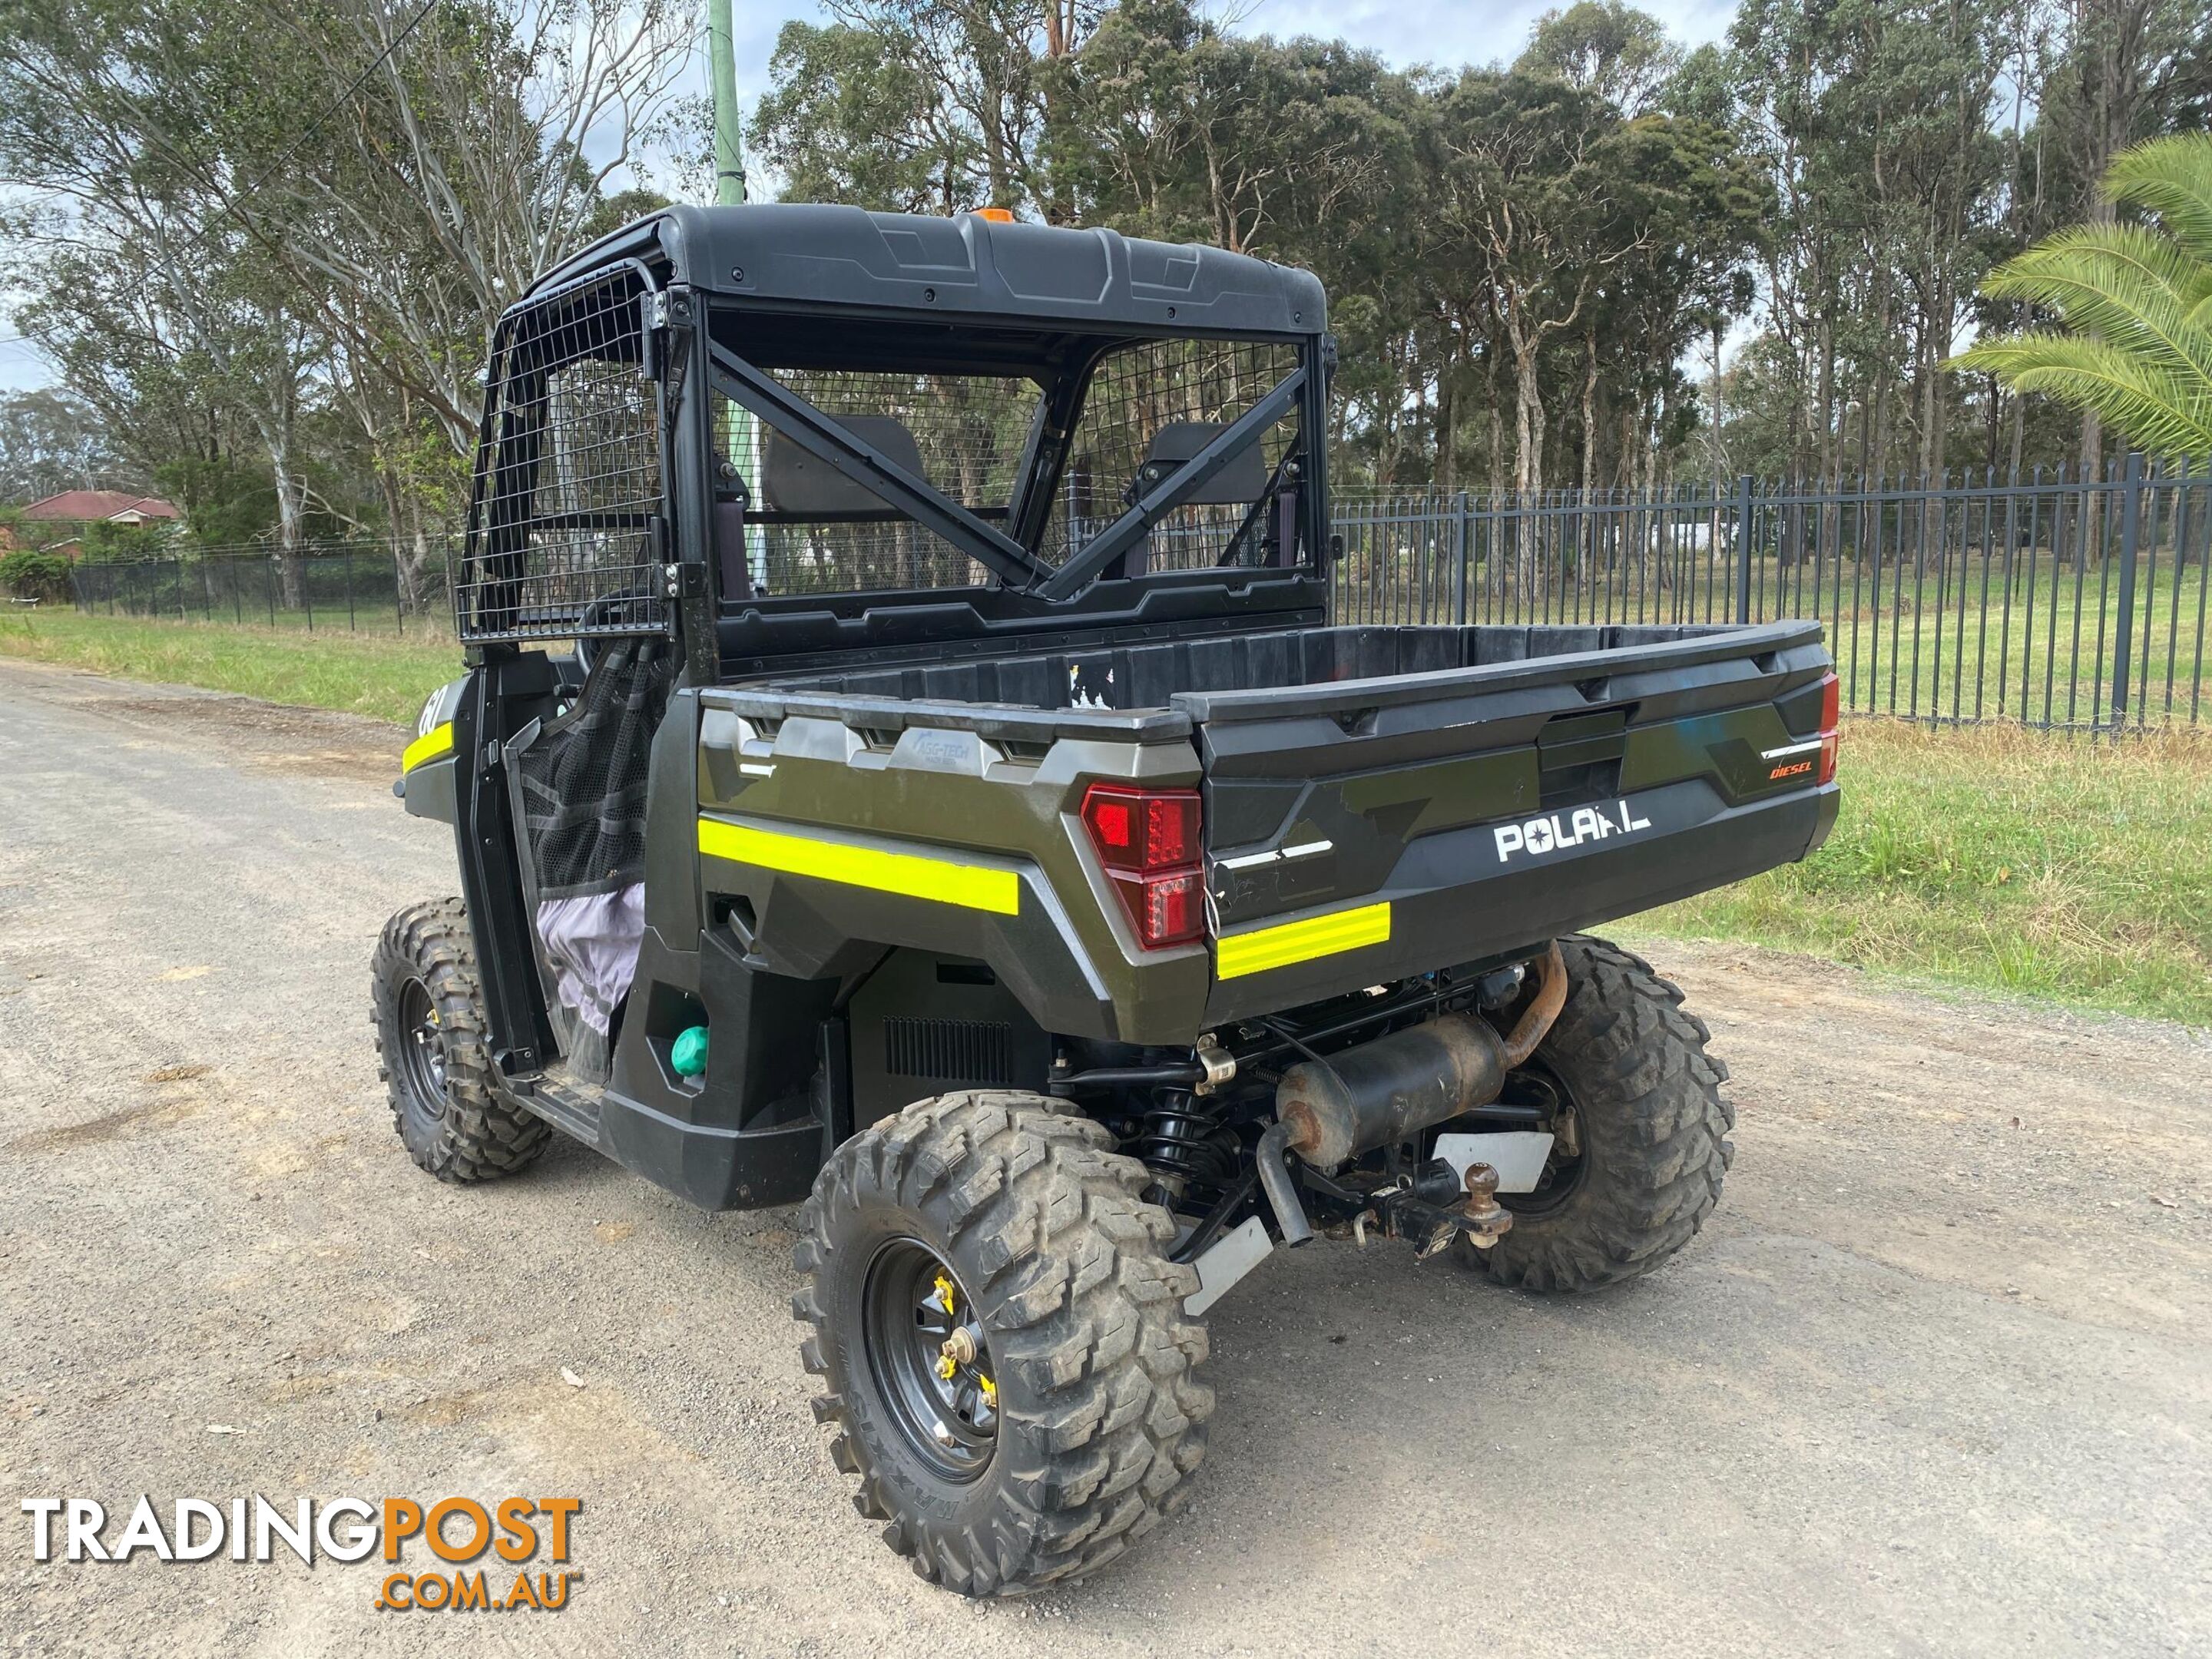 Polaris Ranger ATV All Terrain Vehicle